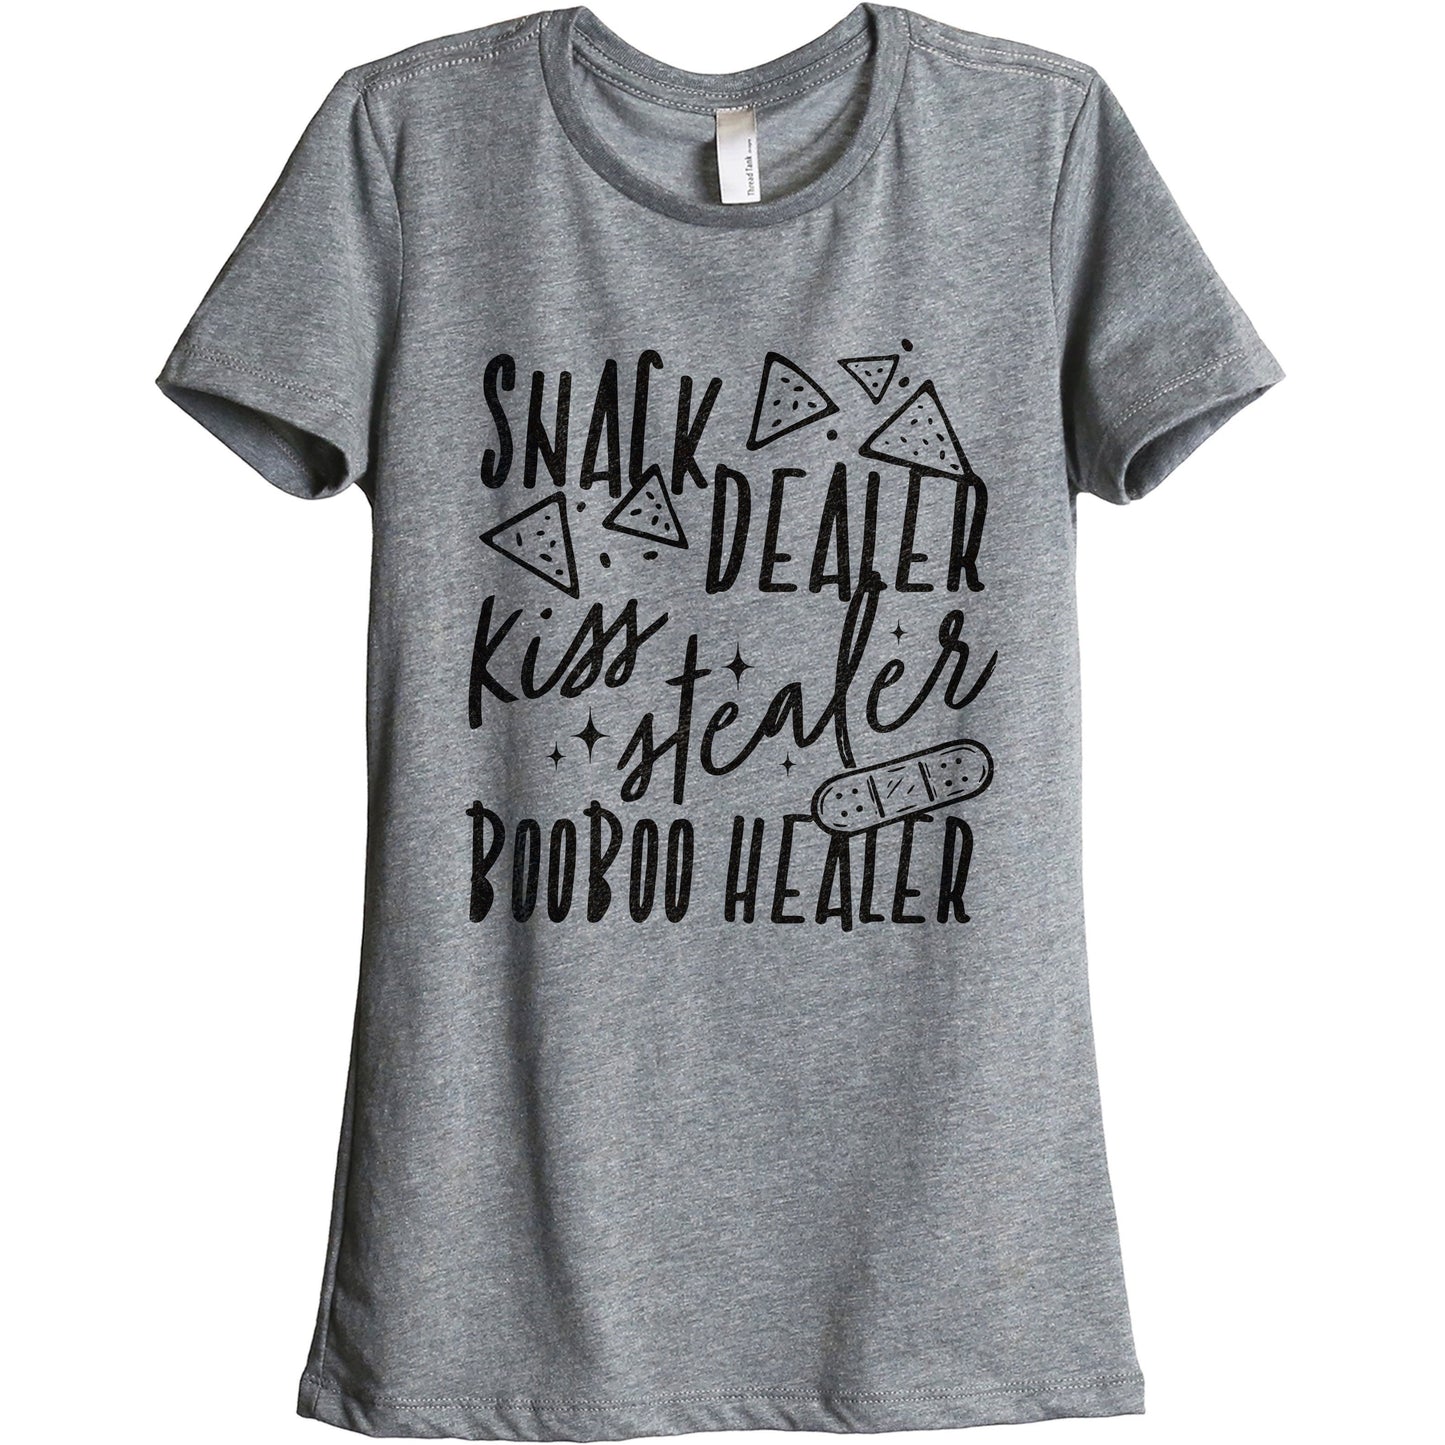 Snack Dealer Kiss Stealer Booboo Healer - Stories You Can Wear by Thread Tank